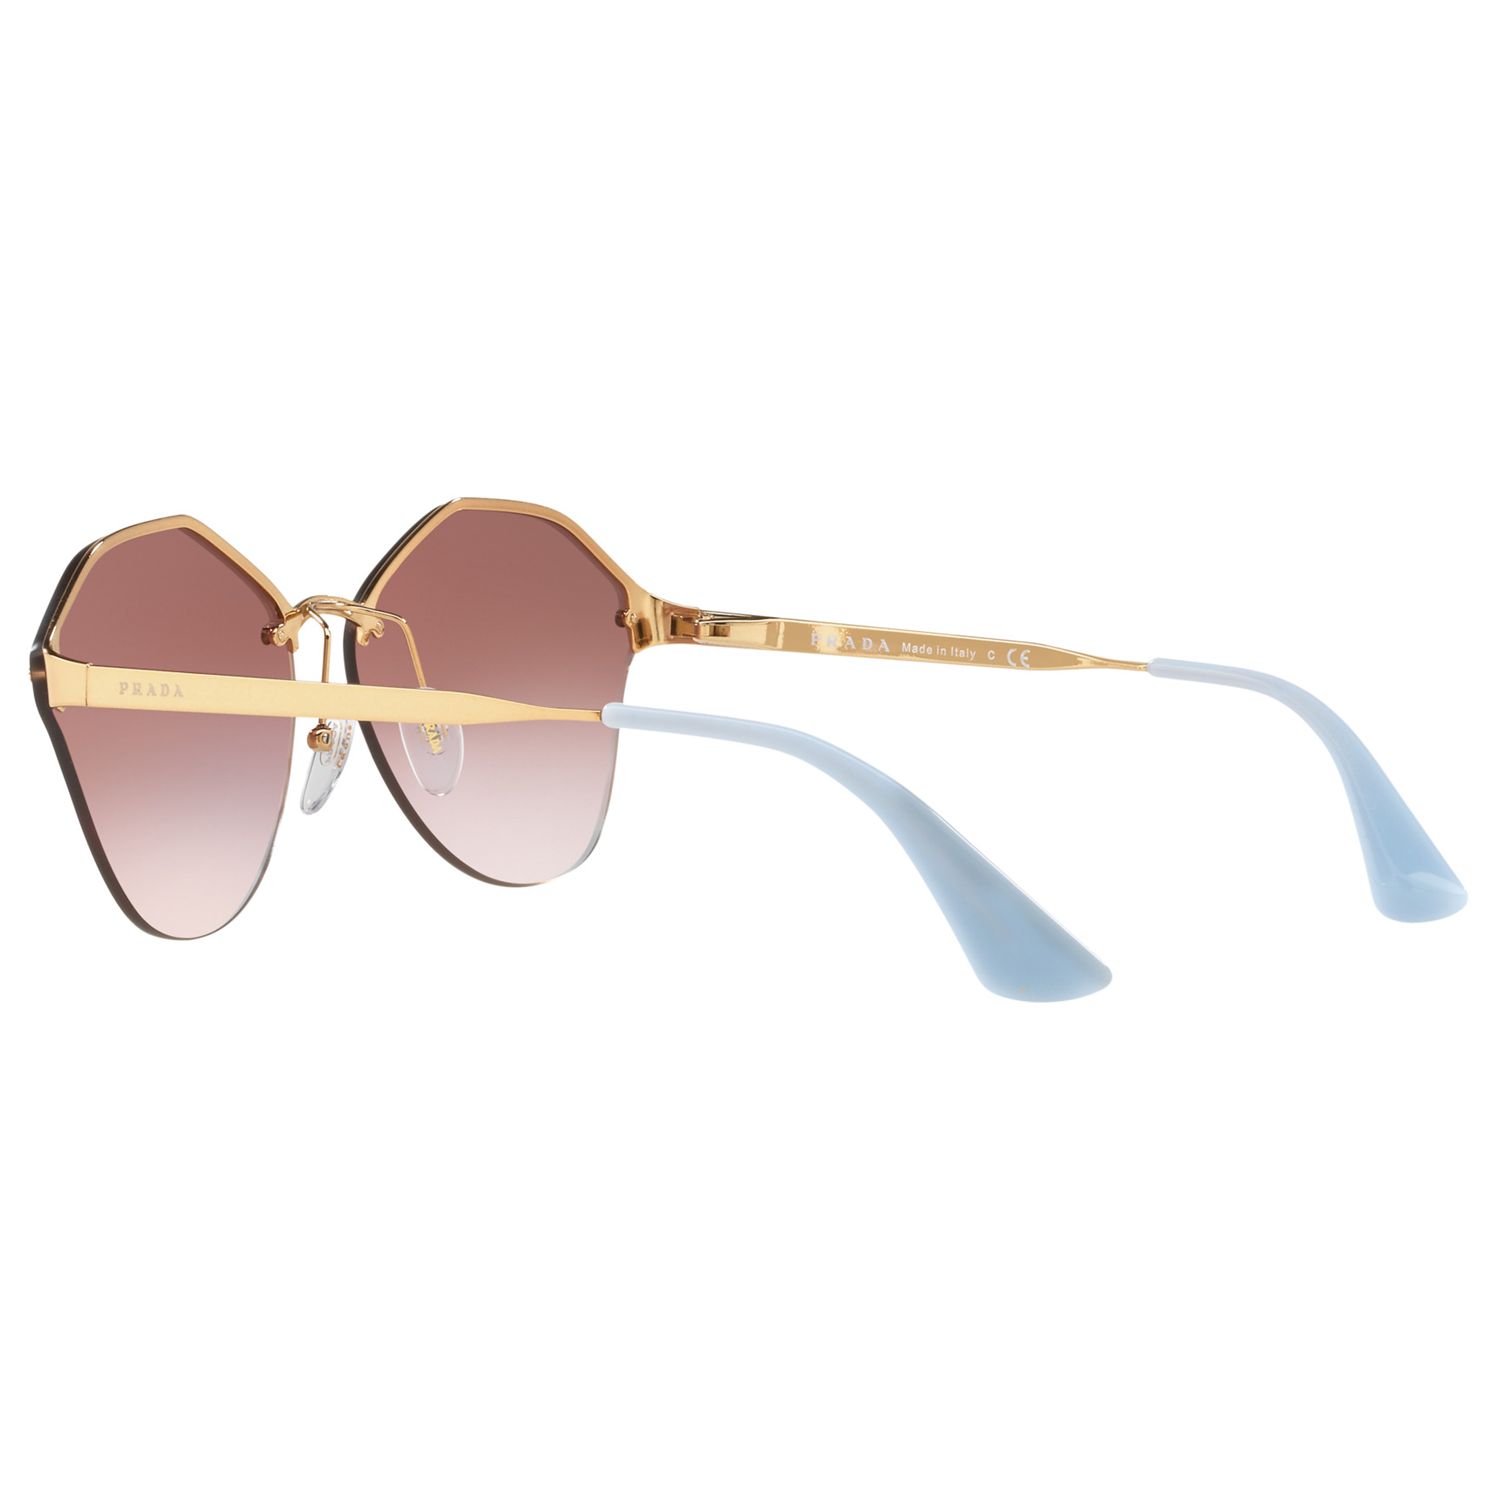 Prada PR 64TS Oval Sunglasses, Gold/Mirror Pink